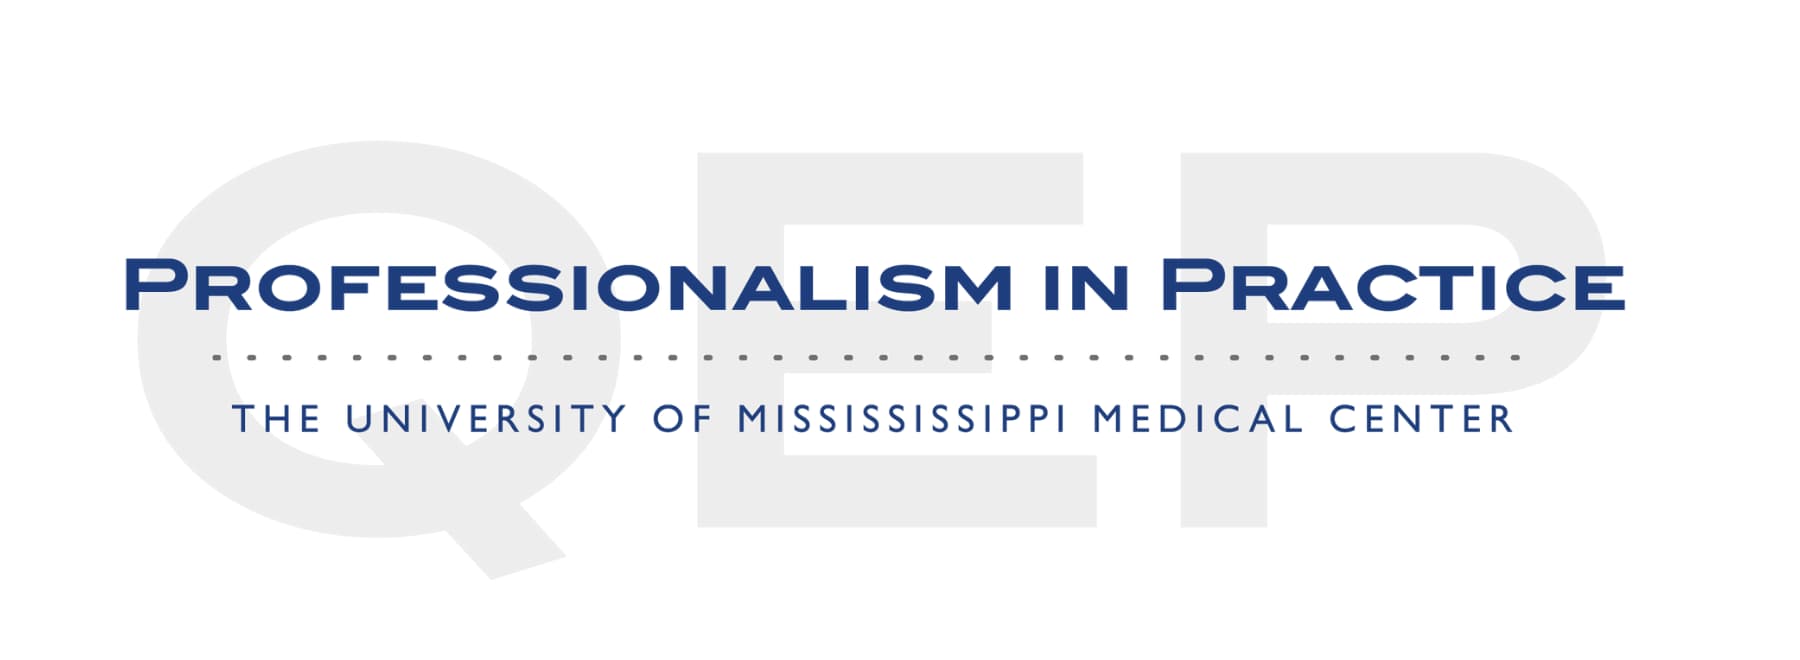 QEP: Professionalism in Practice - University of Mississippi Medical Center